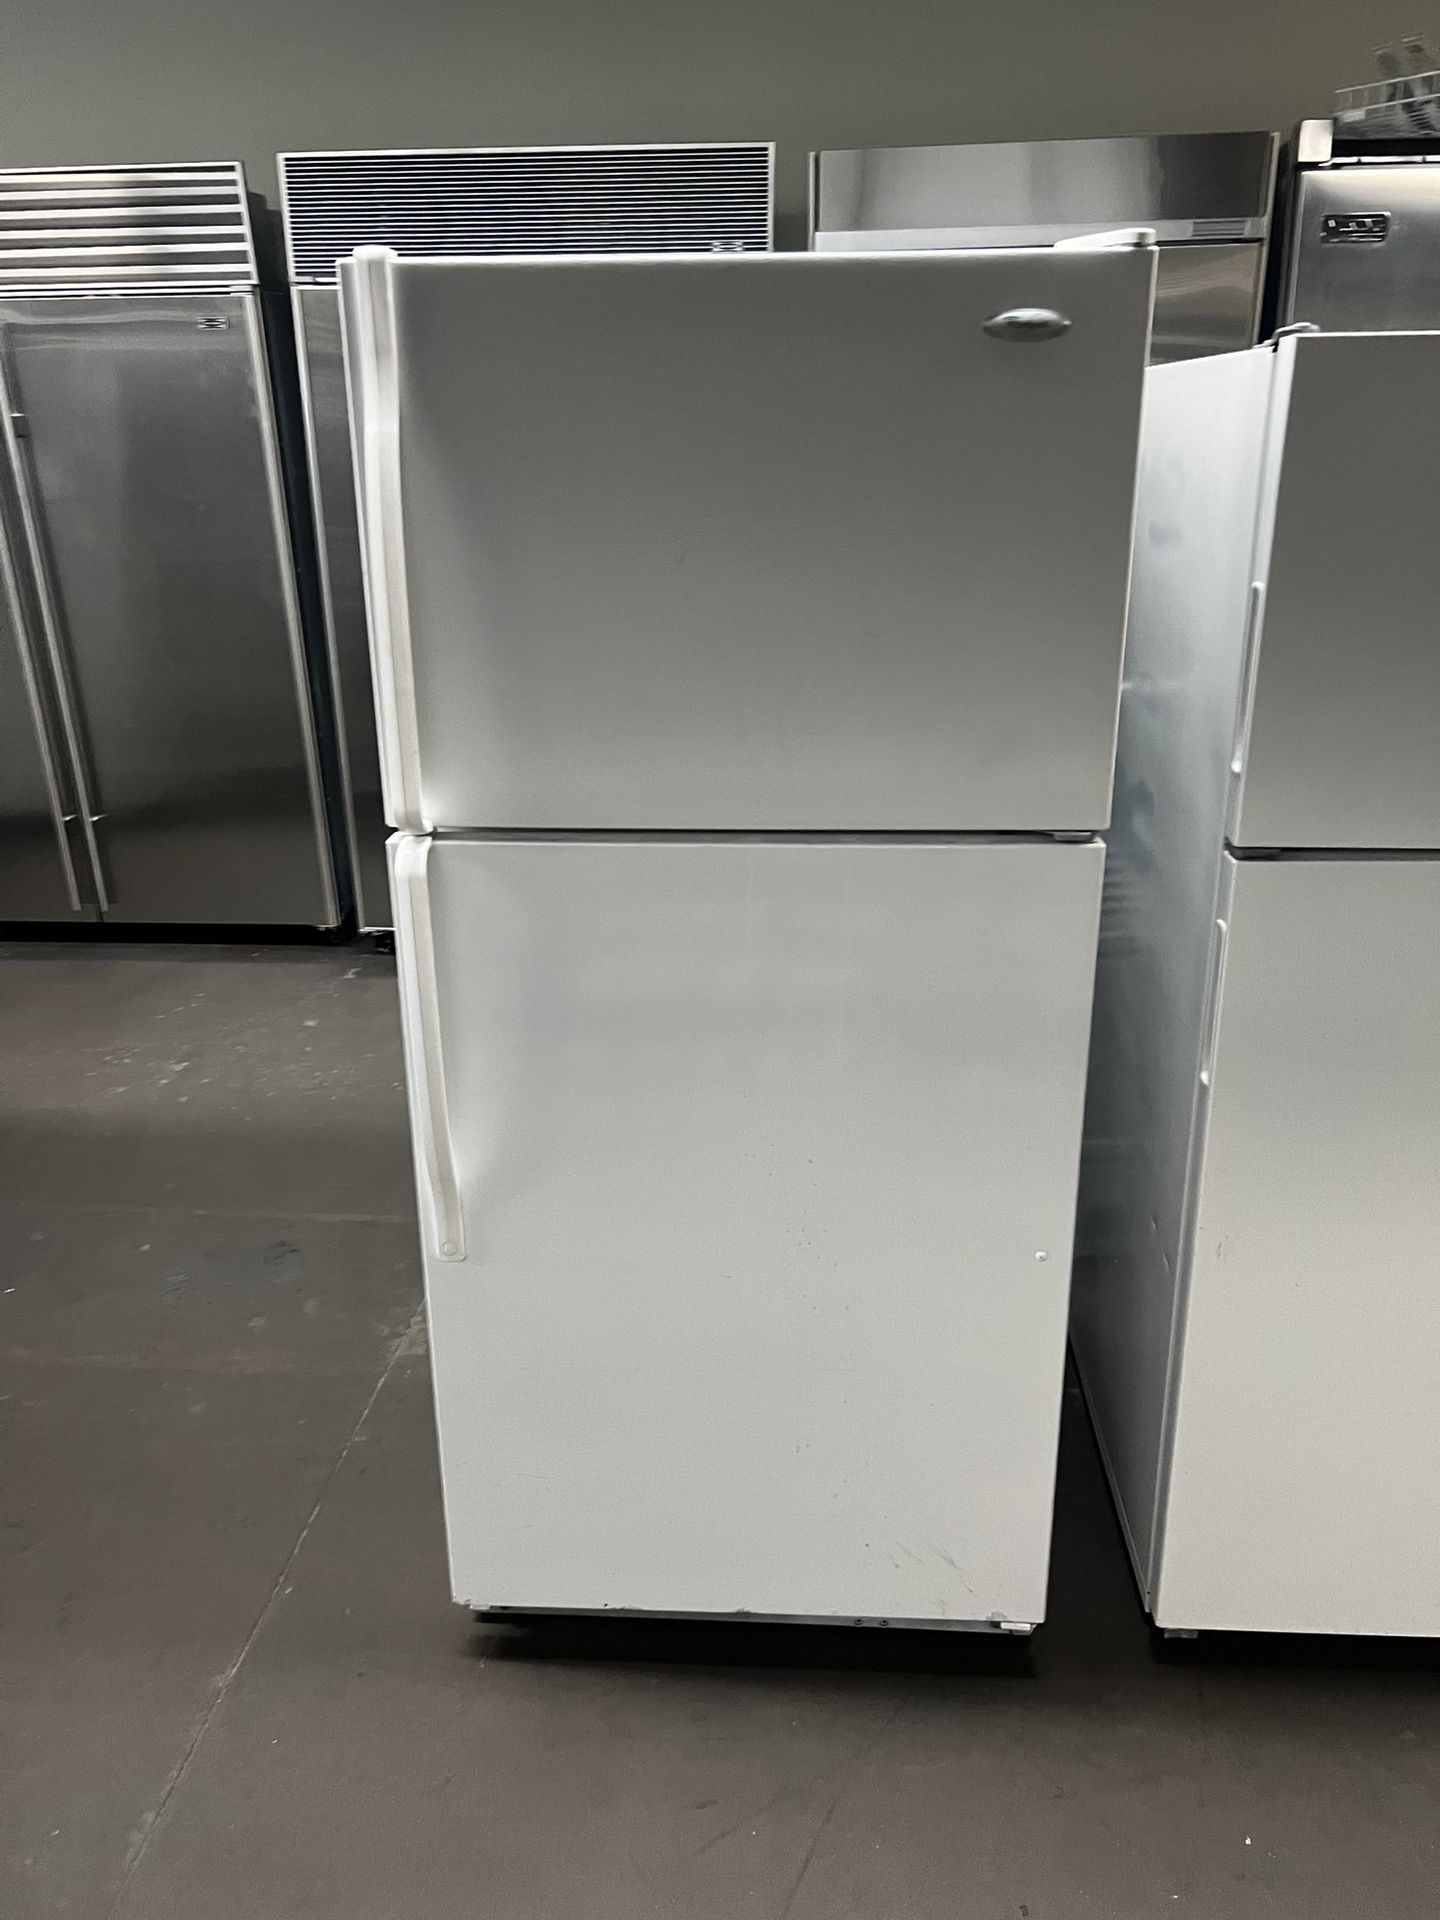 Whirlpool Top Freezer Refrigerator In White 18 Cu Ft 